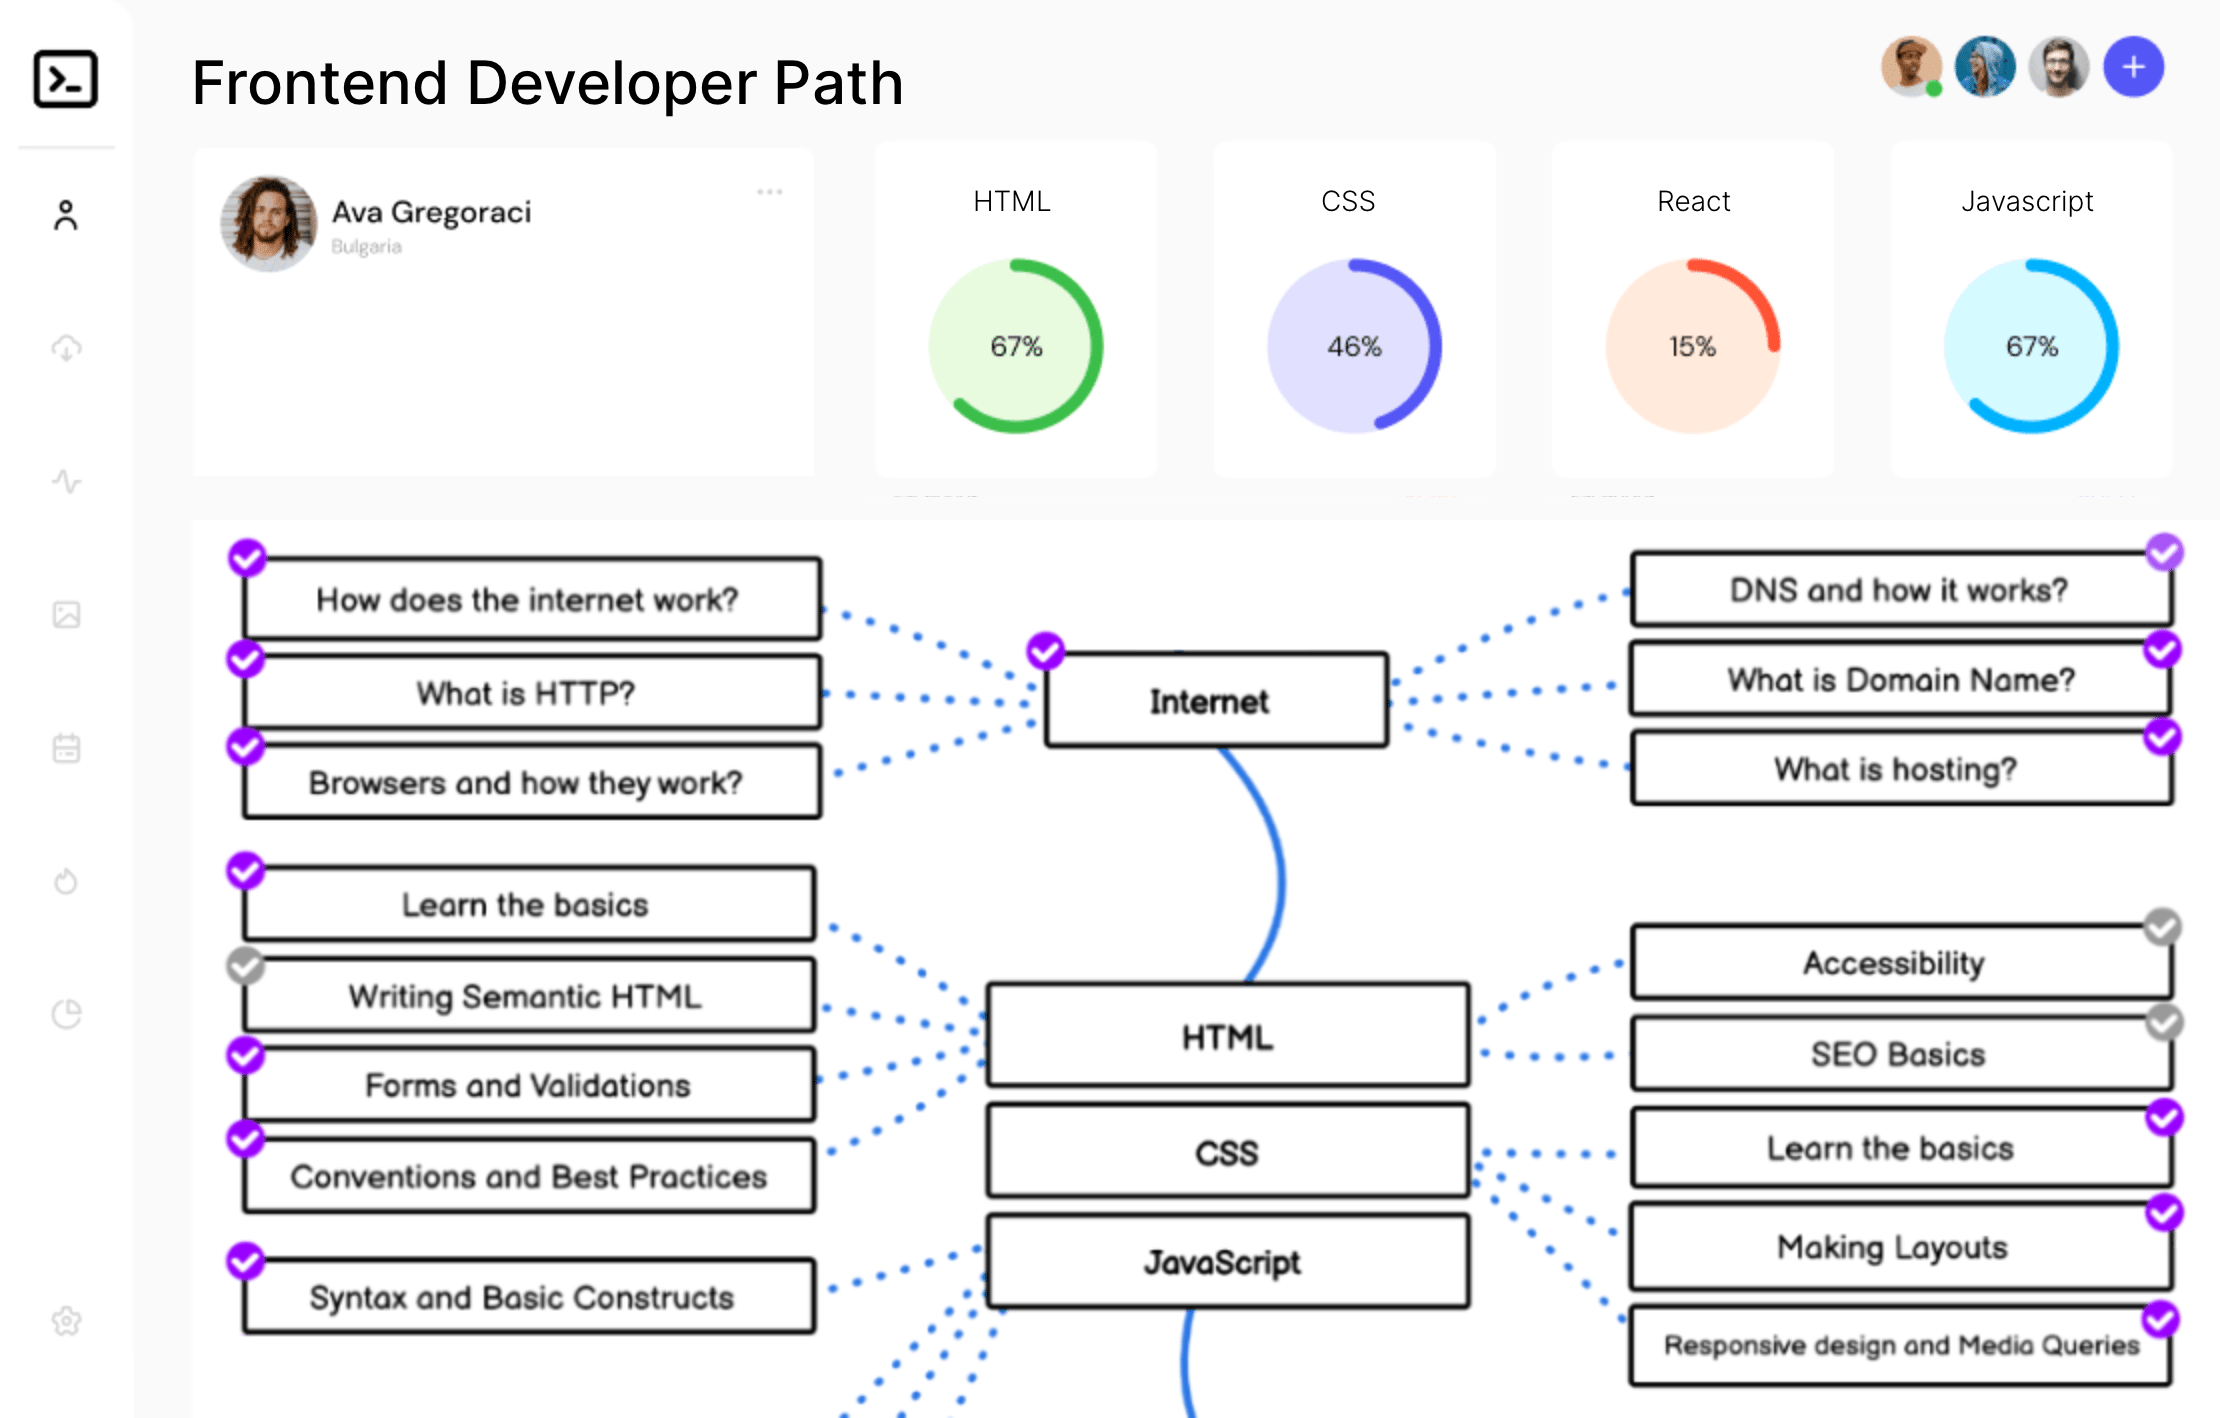 Frontend Developer Career Path